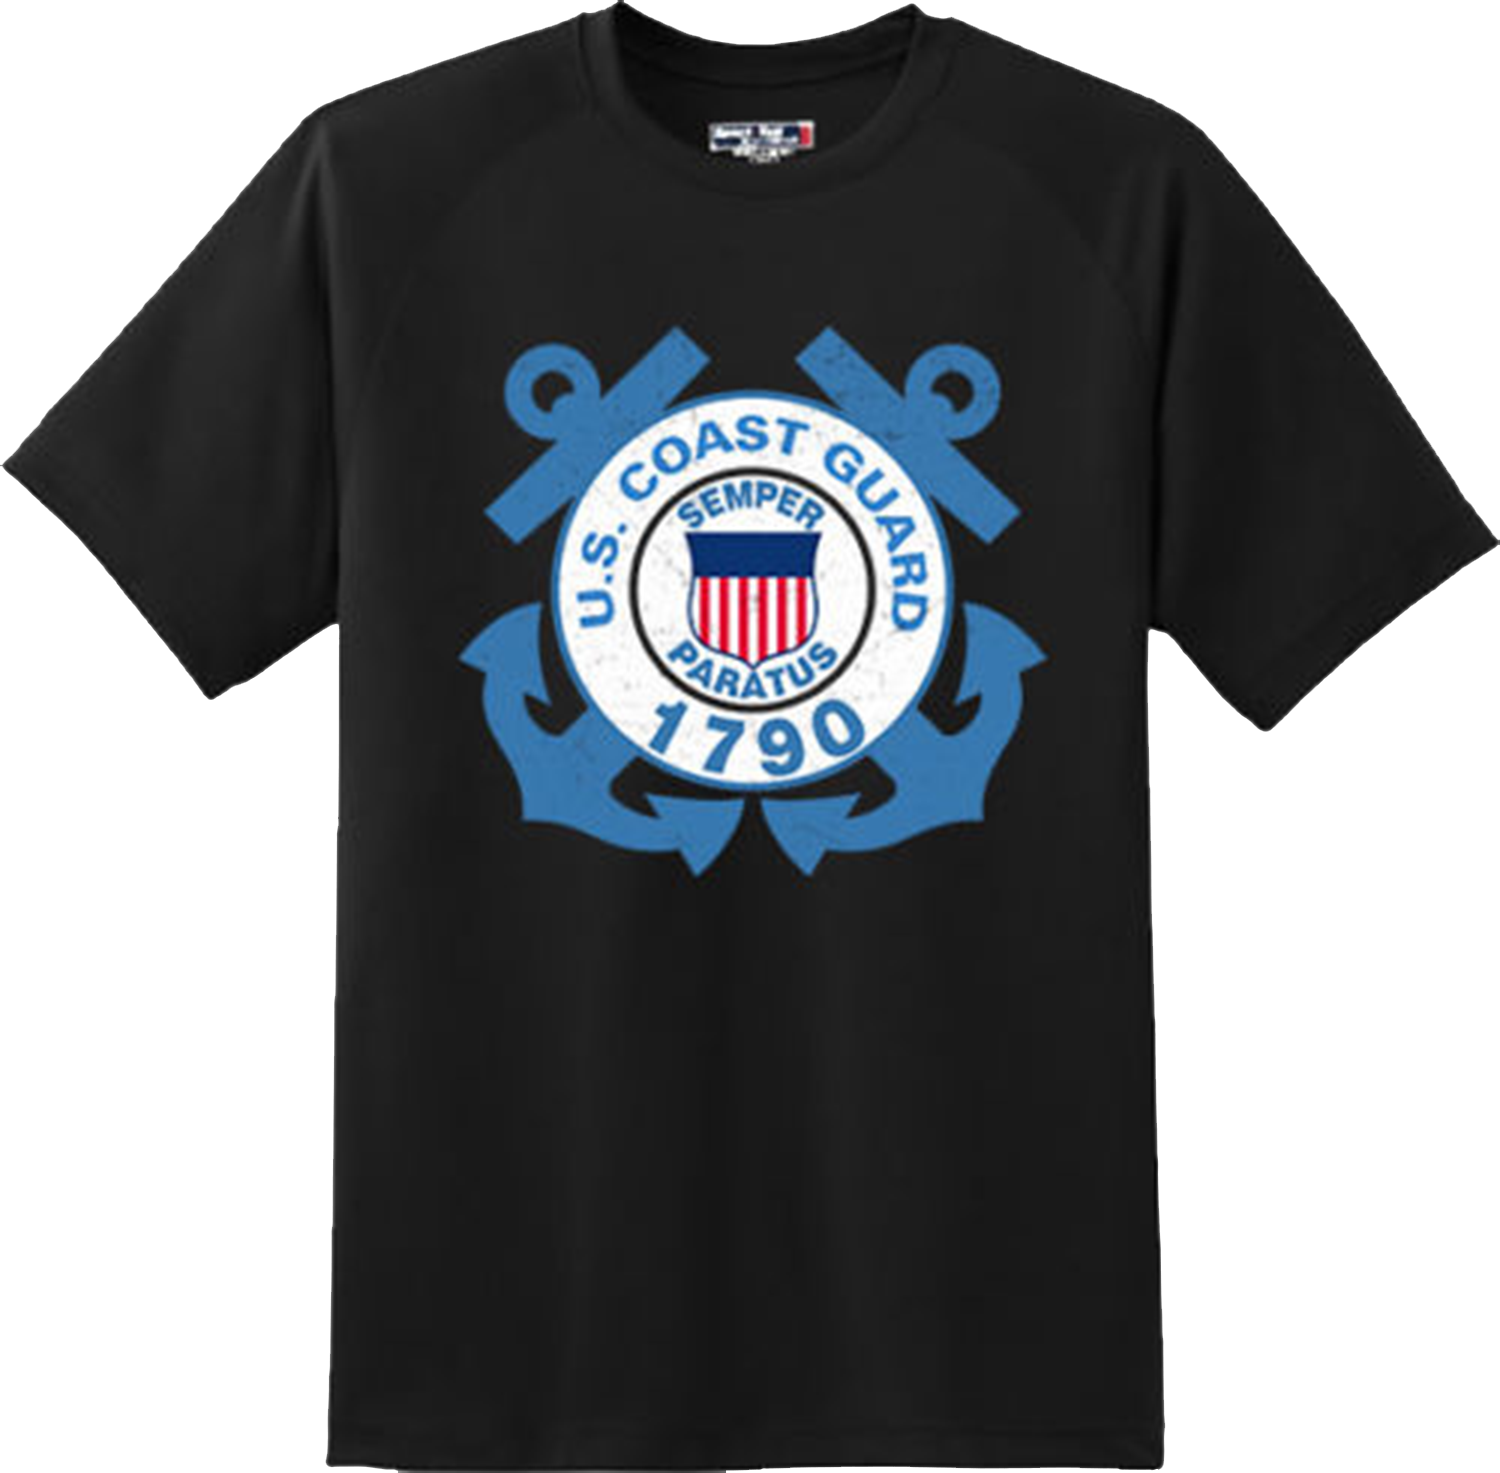 Anchor US Coast Guard Semper Paratus Patriotic Gift T Shirt New Graphic Tee